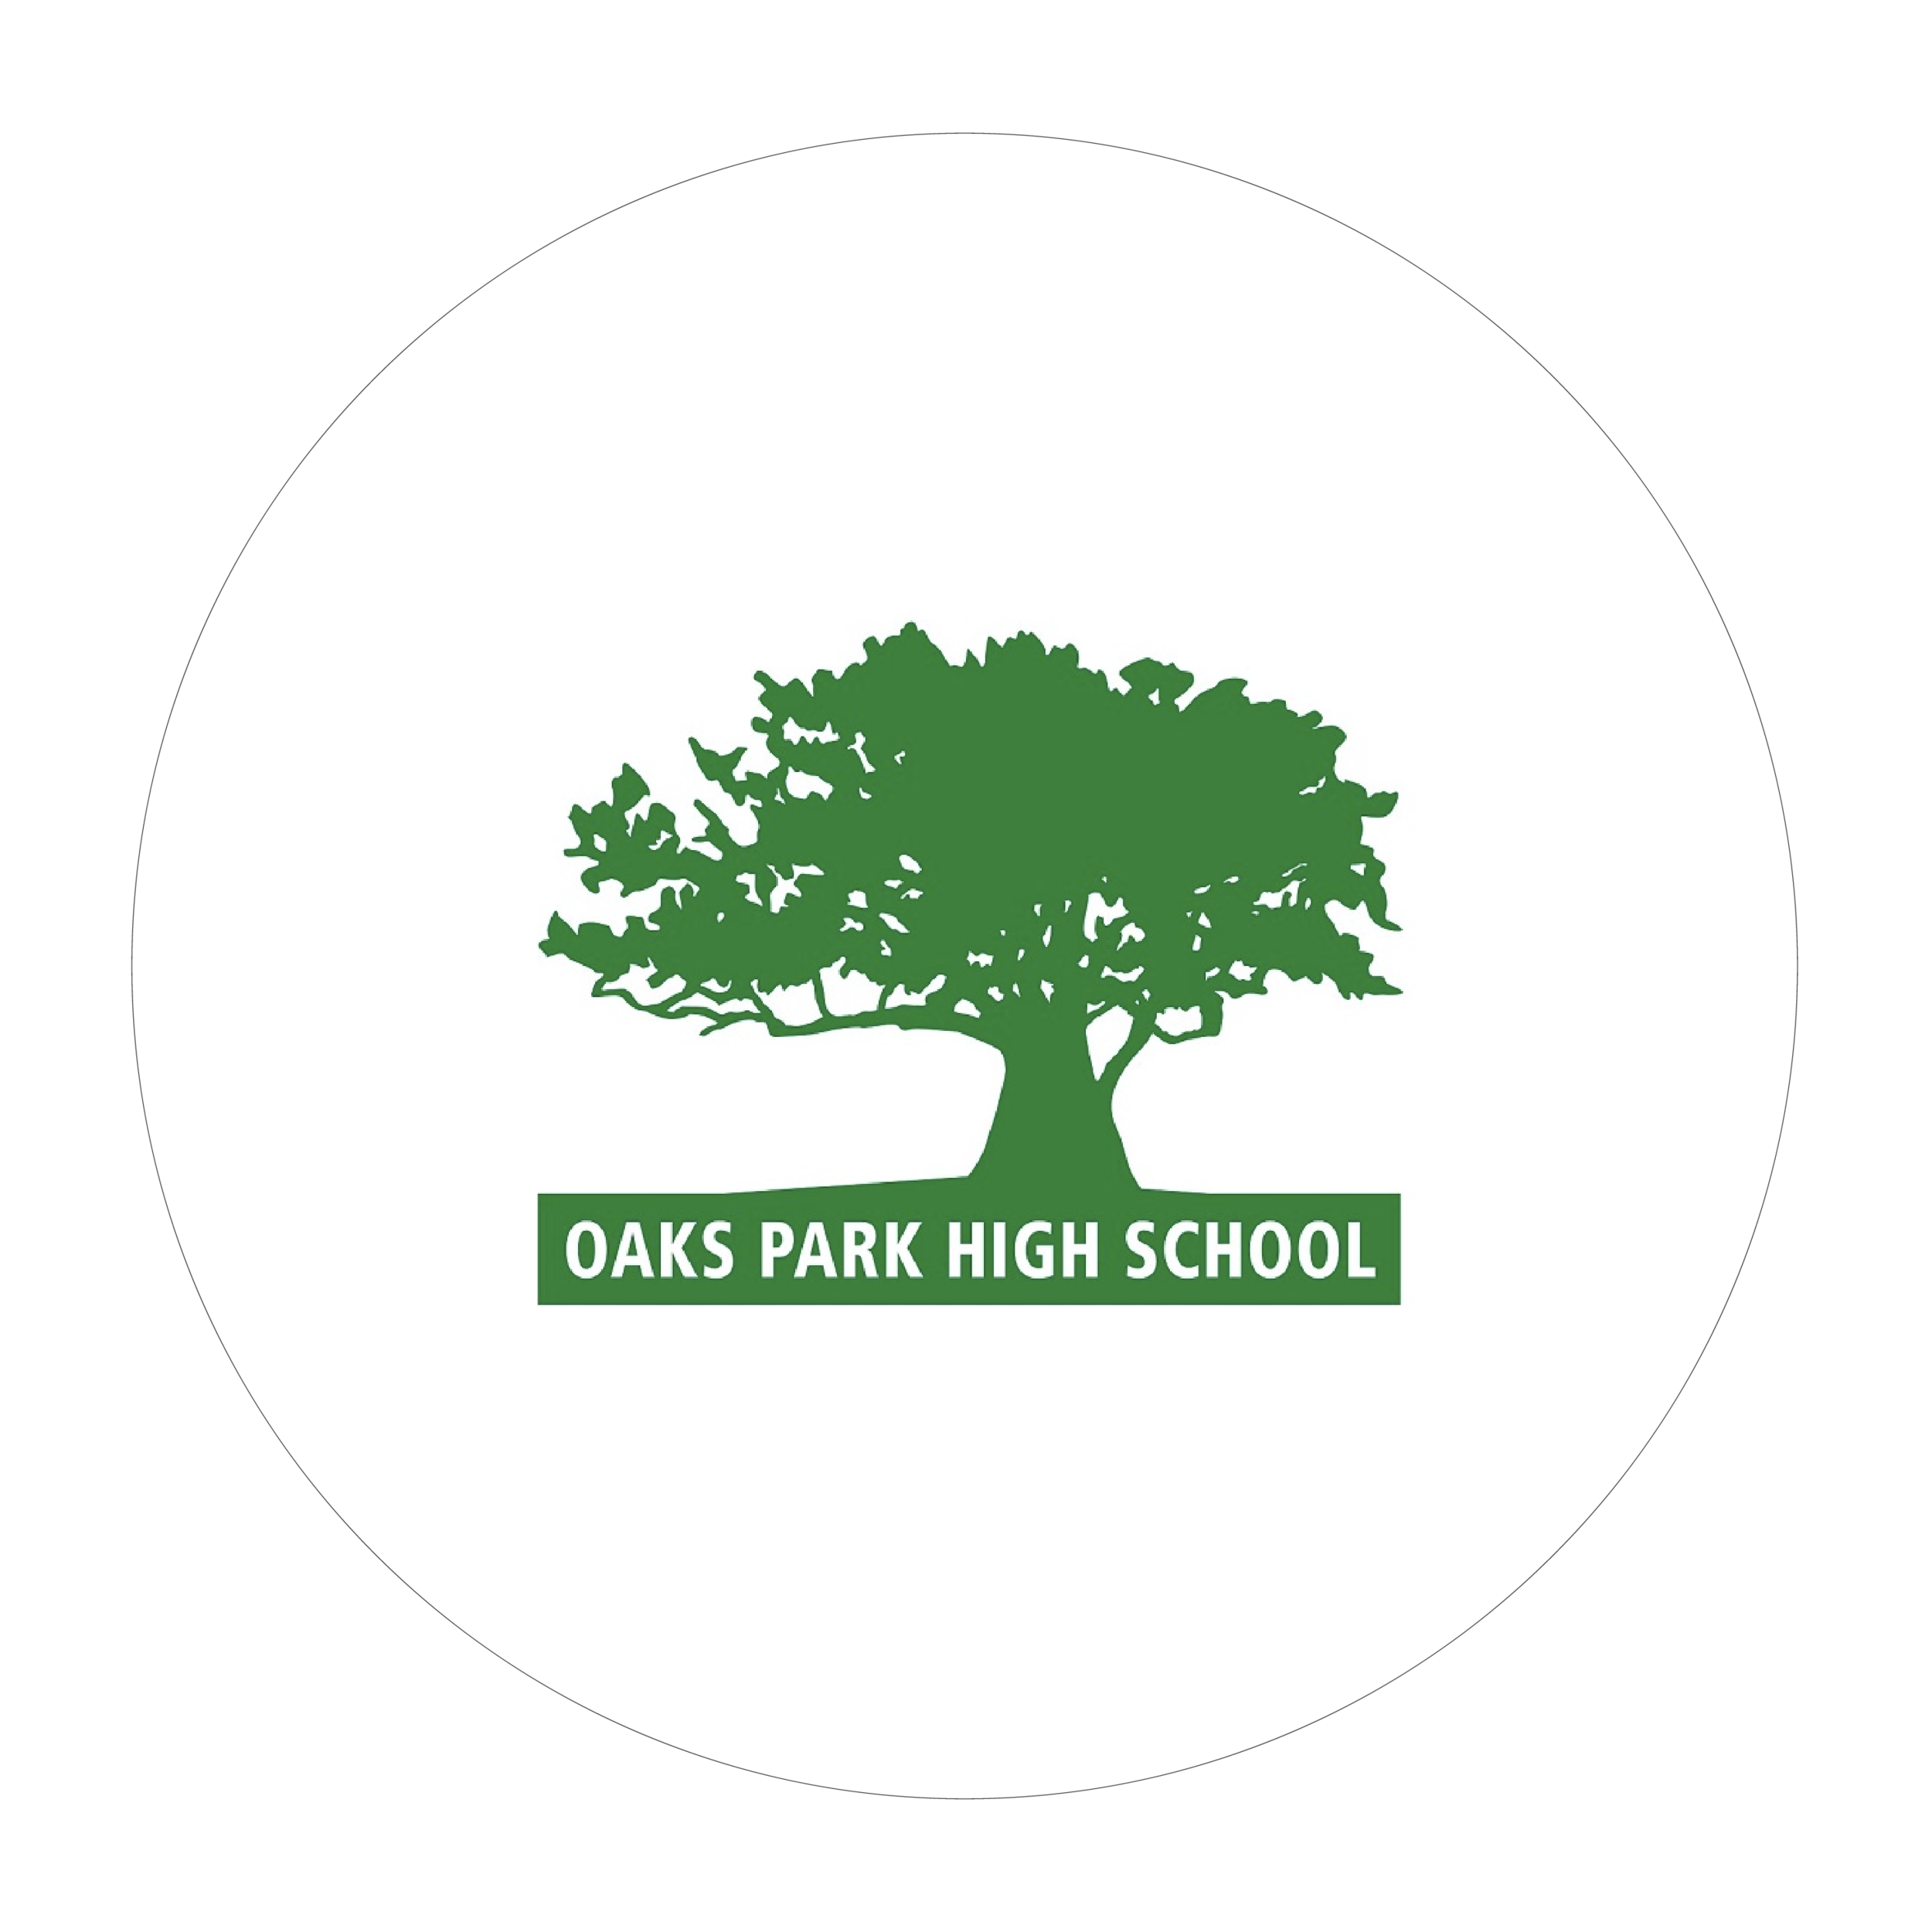 Oaks Park High School